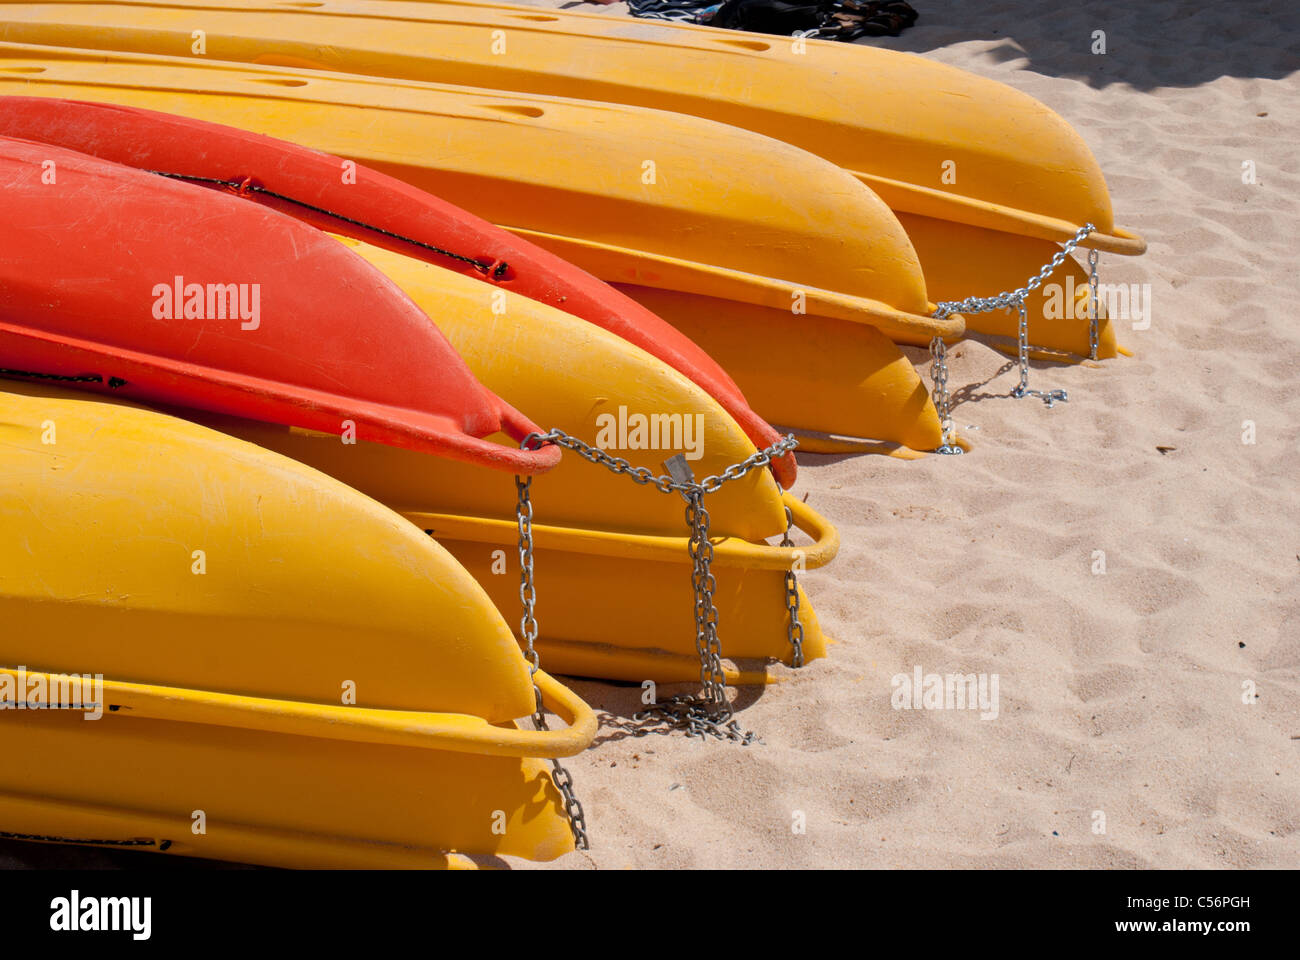 Kyak on a beach Stock Photo - Alamy